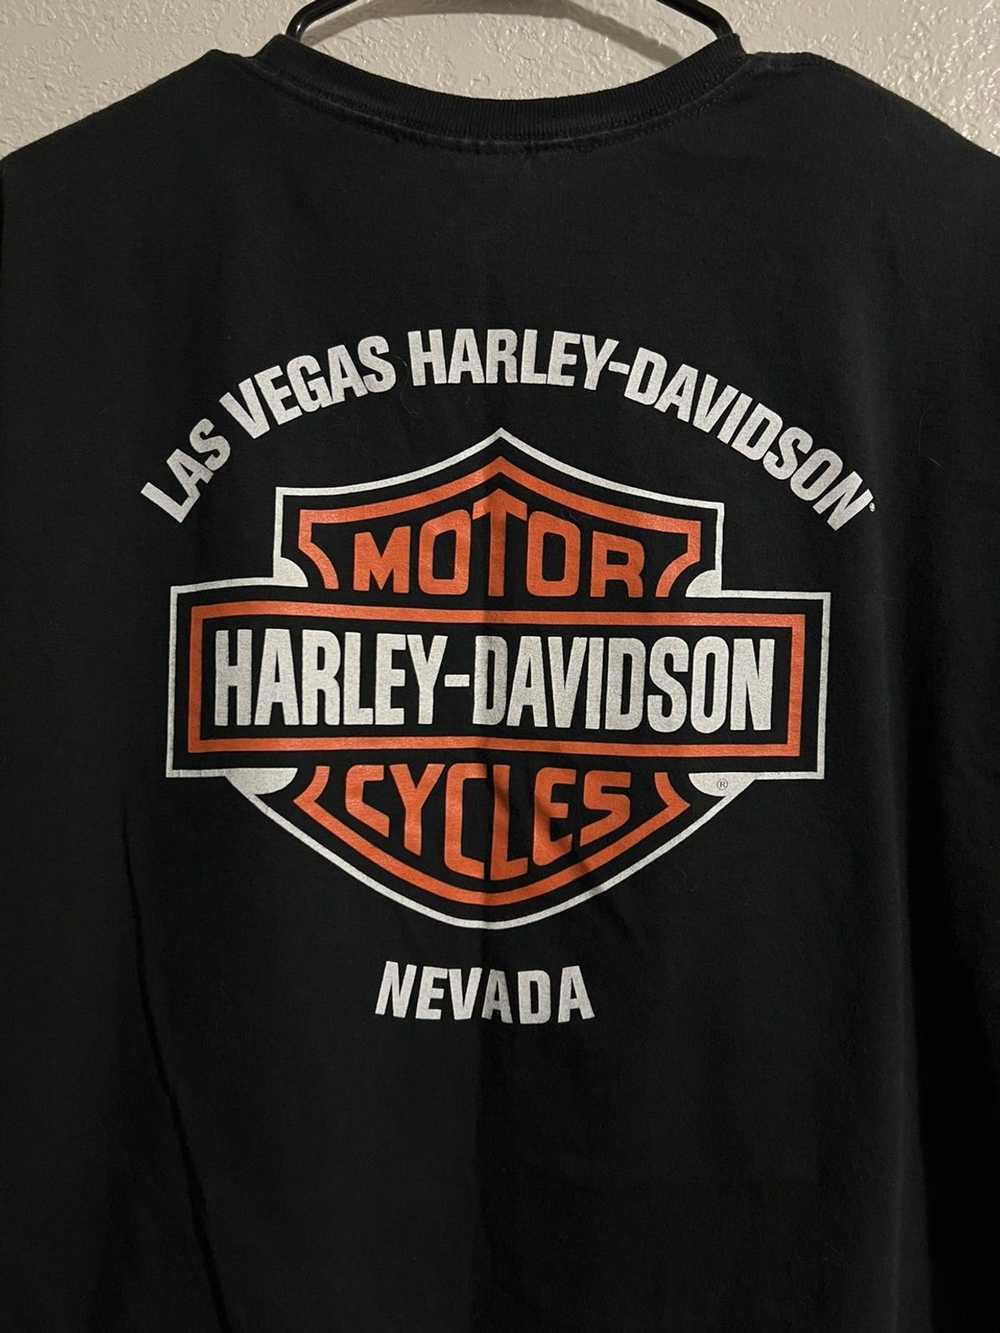 Harley Davidson Harley Davidson Tee - image 4